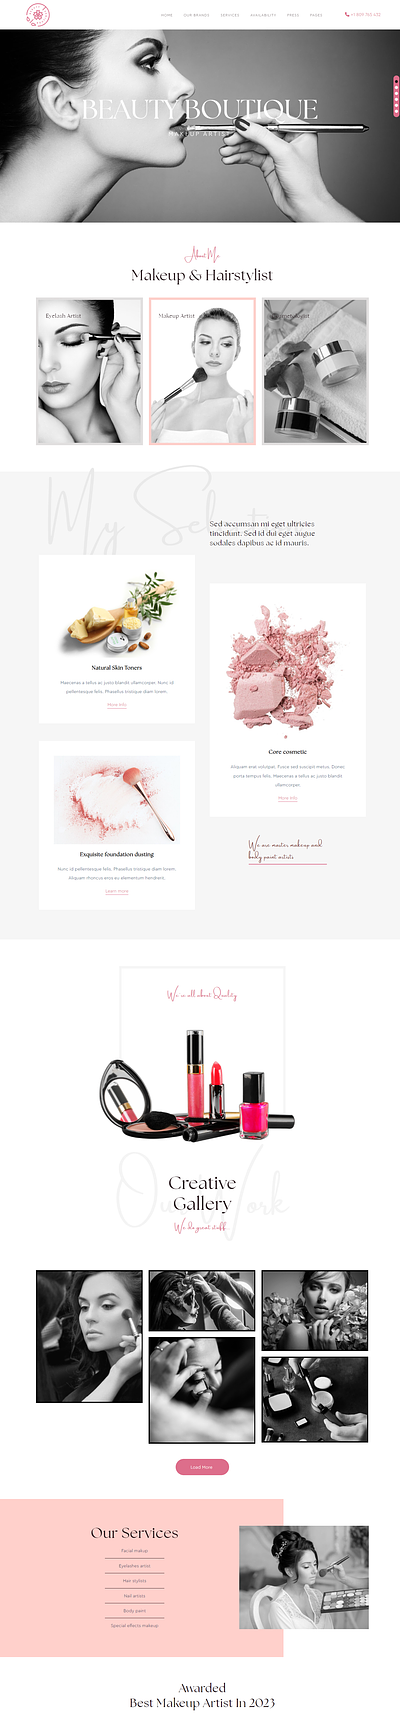 Spa Boutique beauty design maekup artist salon spa themes ui ux website wordpress theme